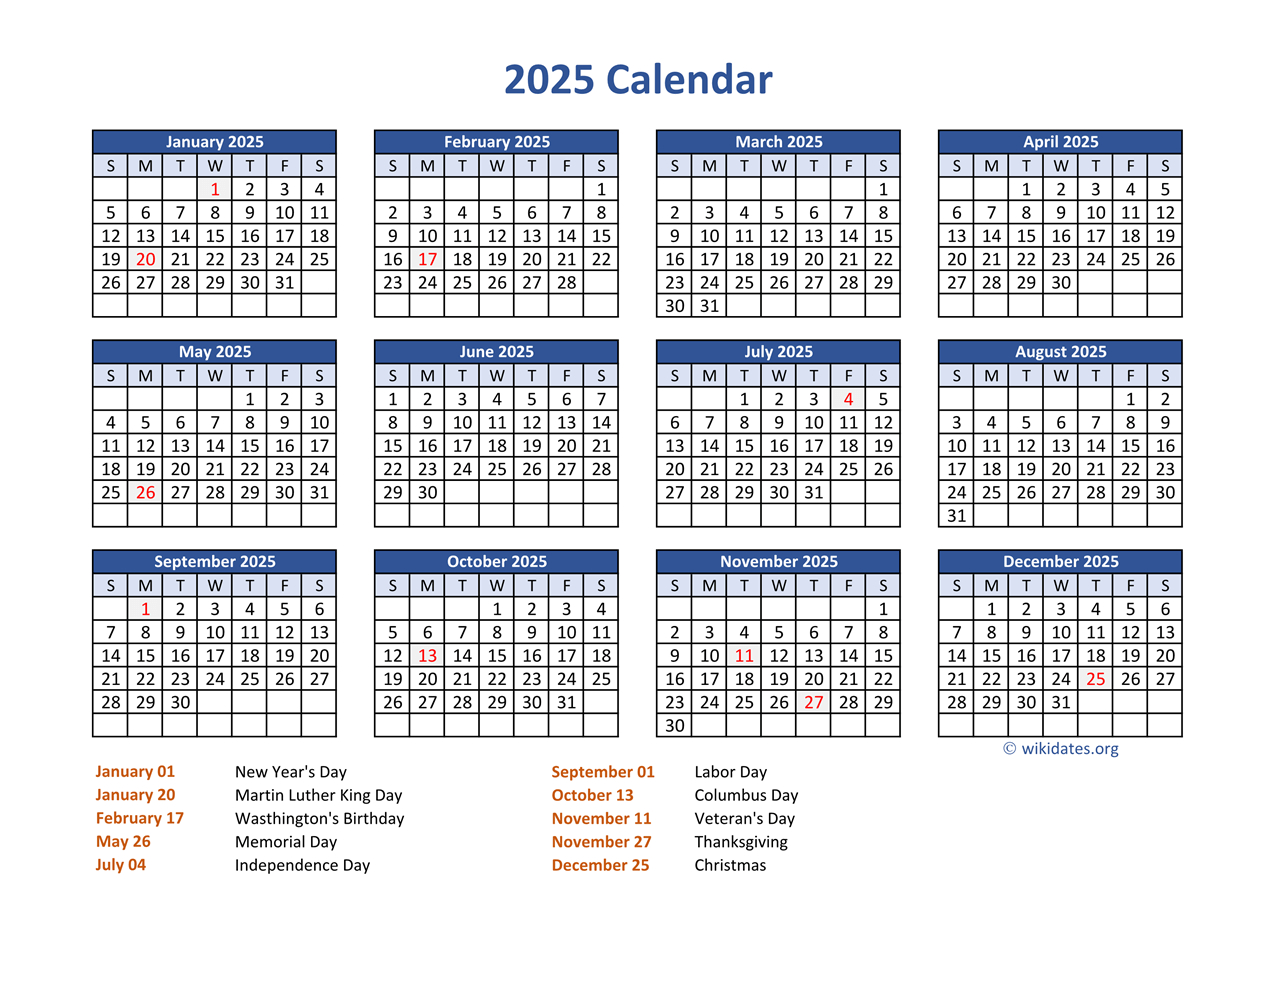 Pdf Calendar 2025 With Federal Holidays | Wikidates regarding Printable Federal Government Holiday Calendar